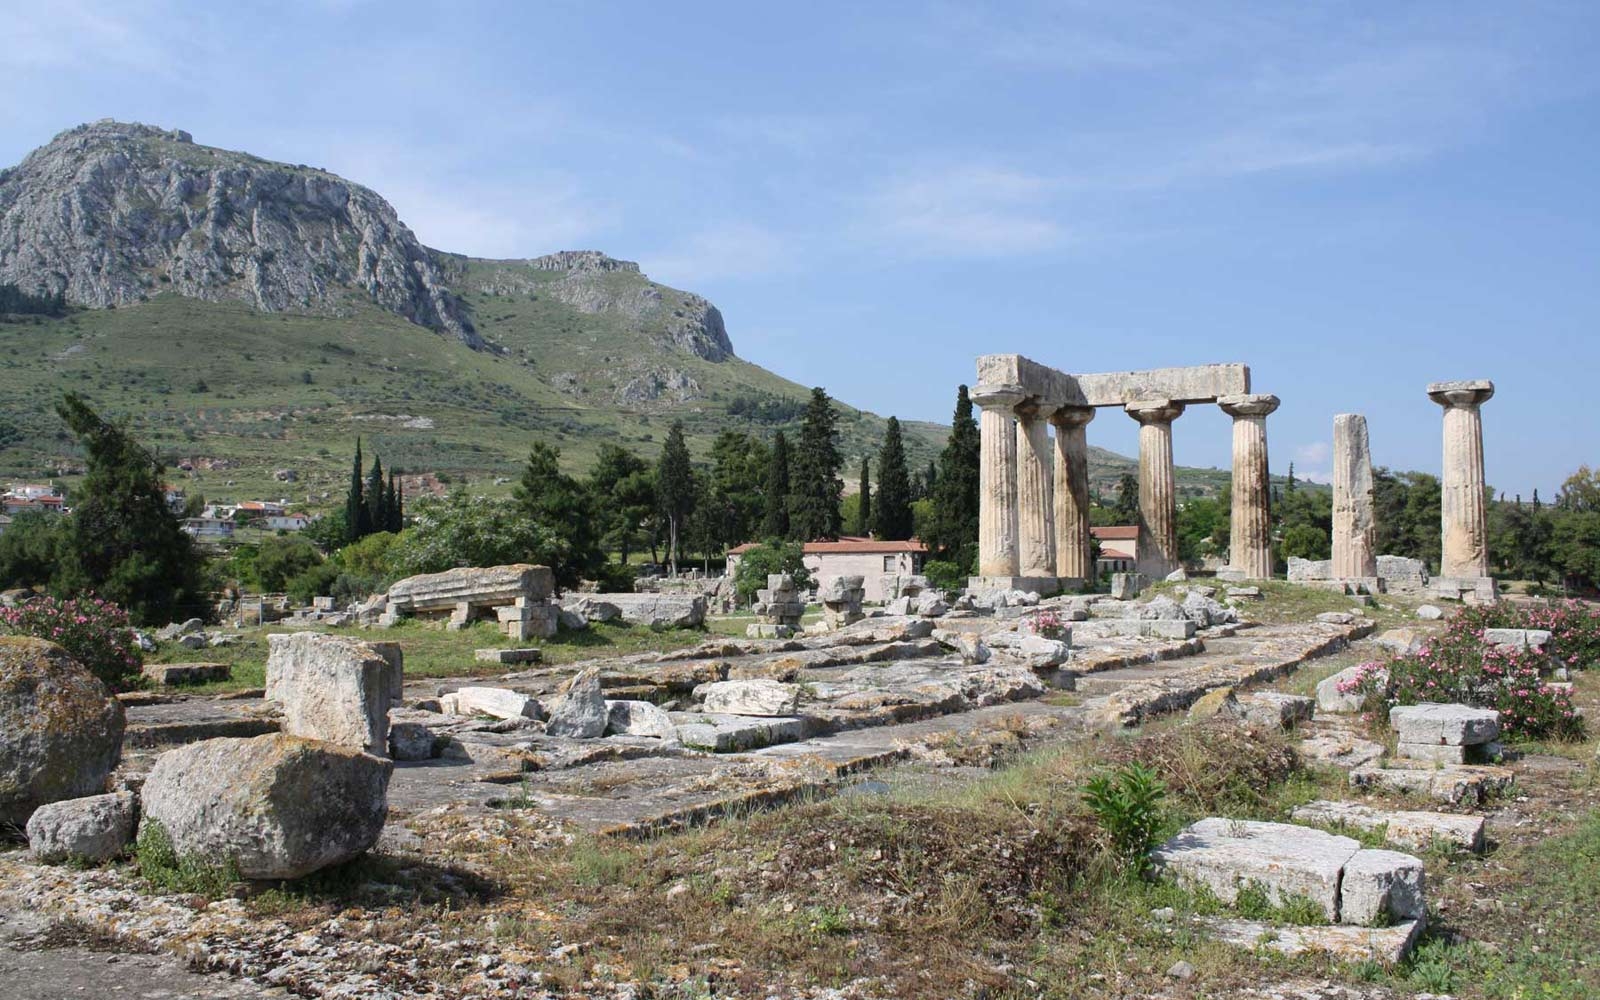 Antic Corinth Site (10km)